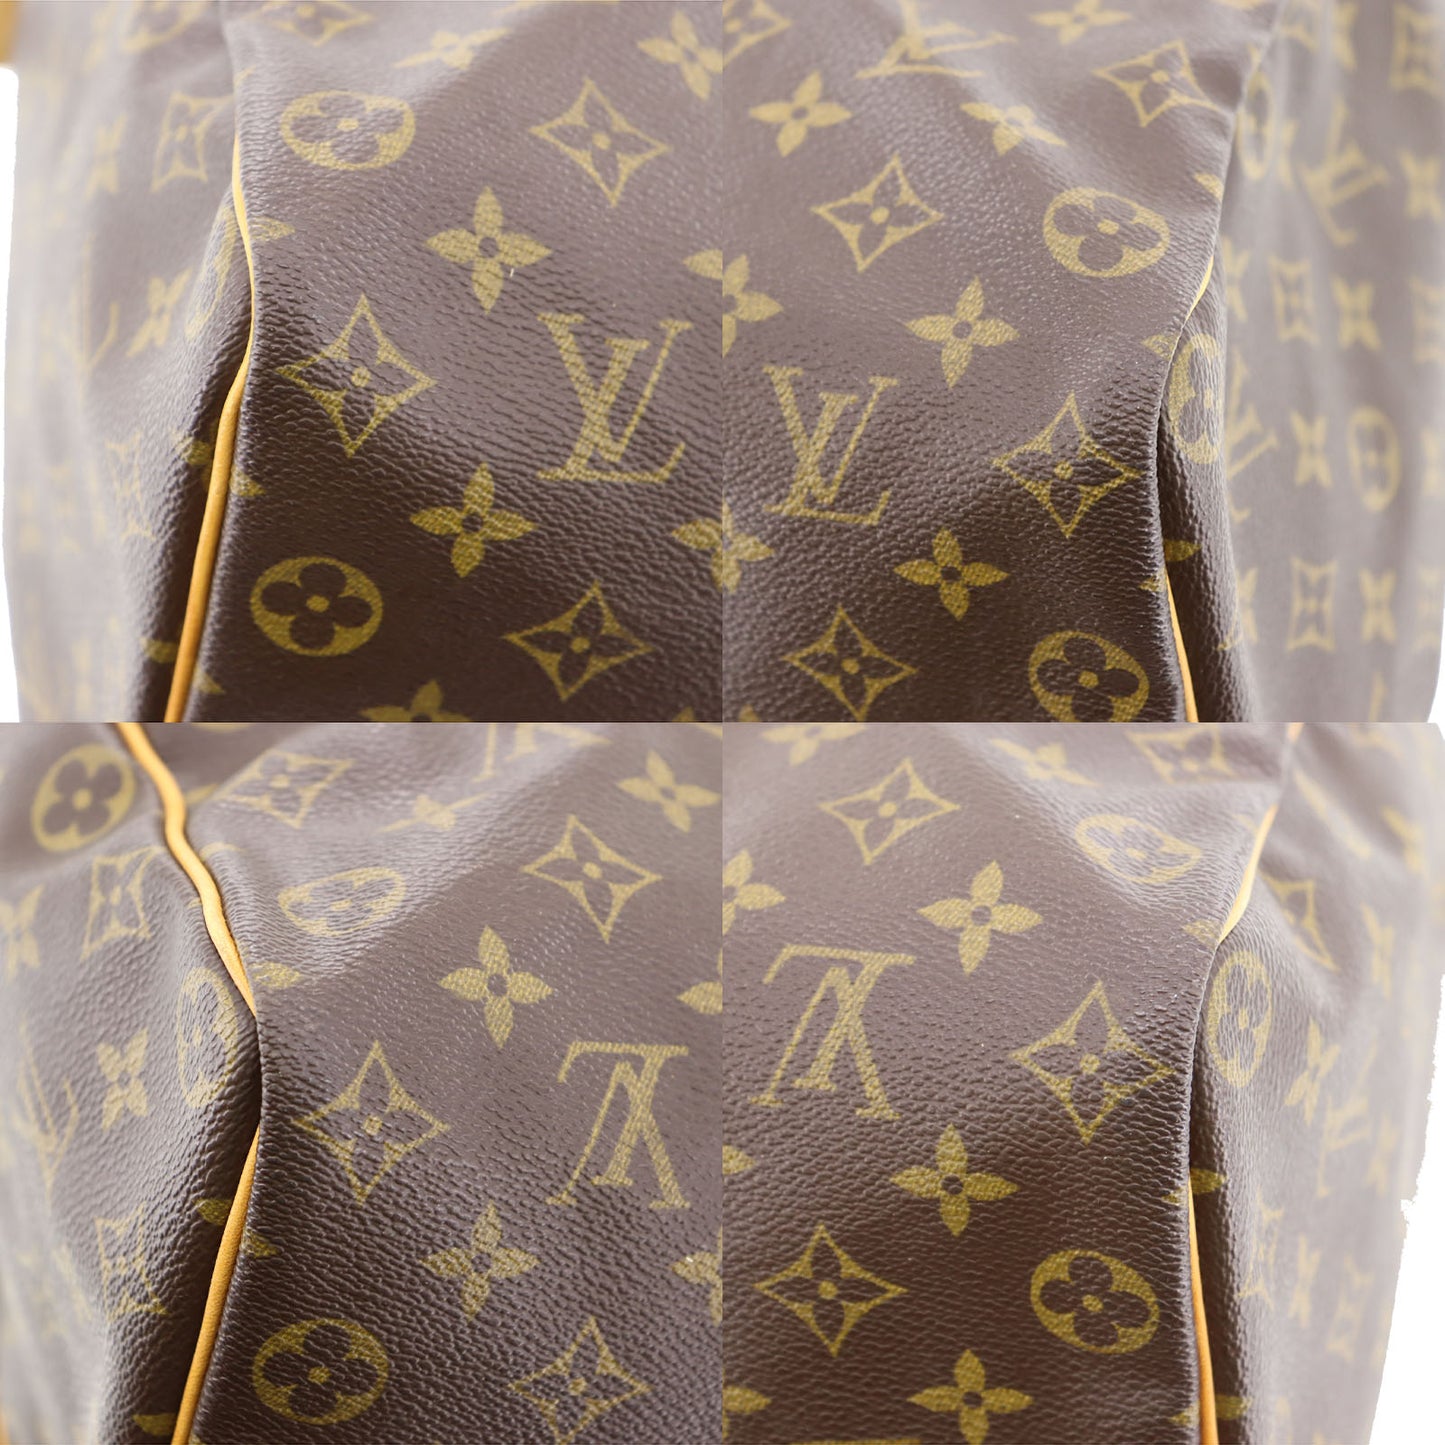 Louis Vuitton LV Speedy 35 Handbag Monogram Leather M41524 #BK581